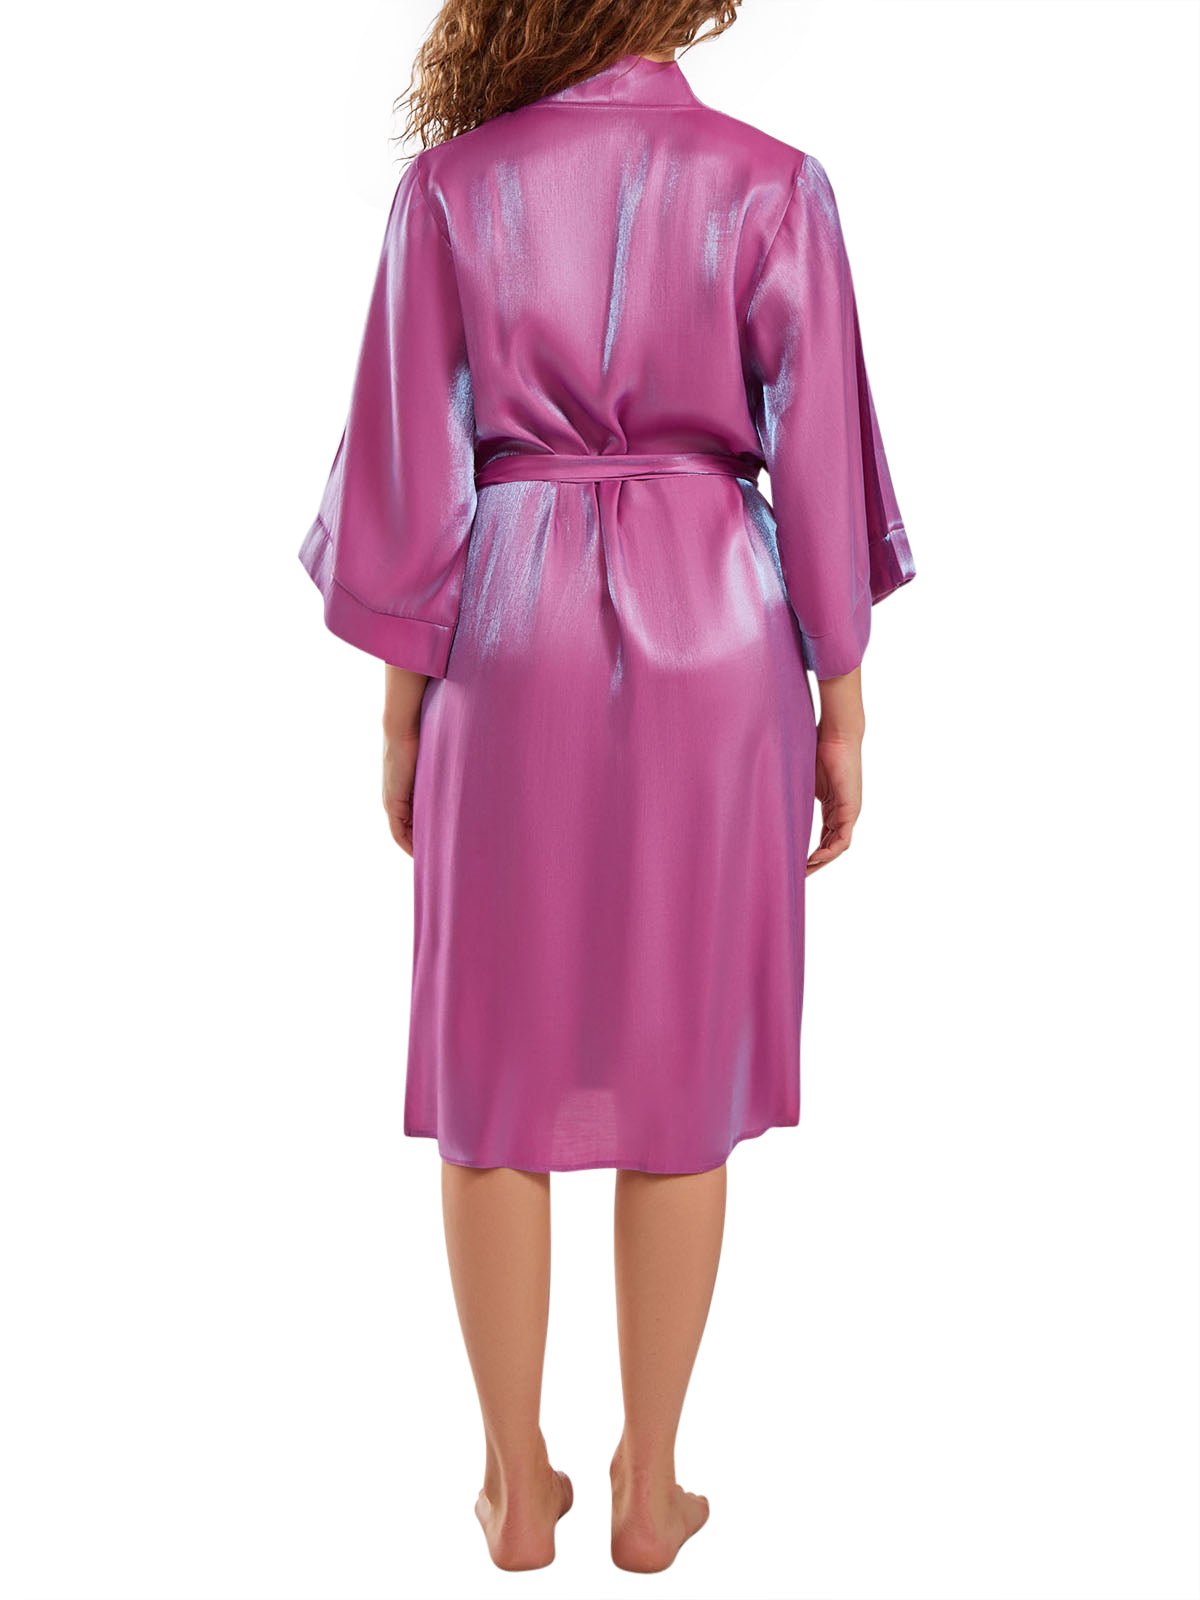 iCollection Robe Women&#39;s Janet Robe Loungewear